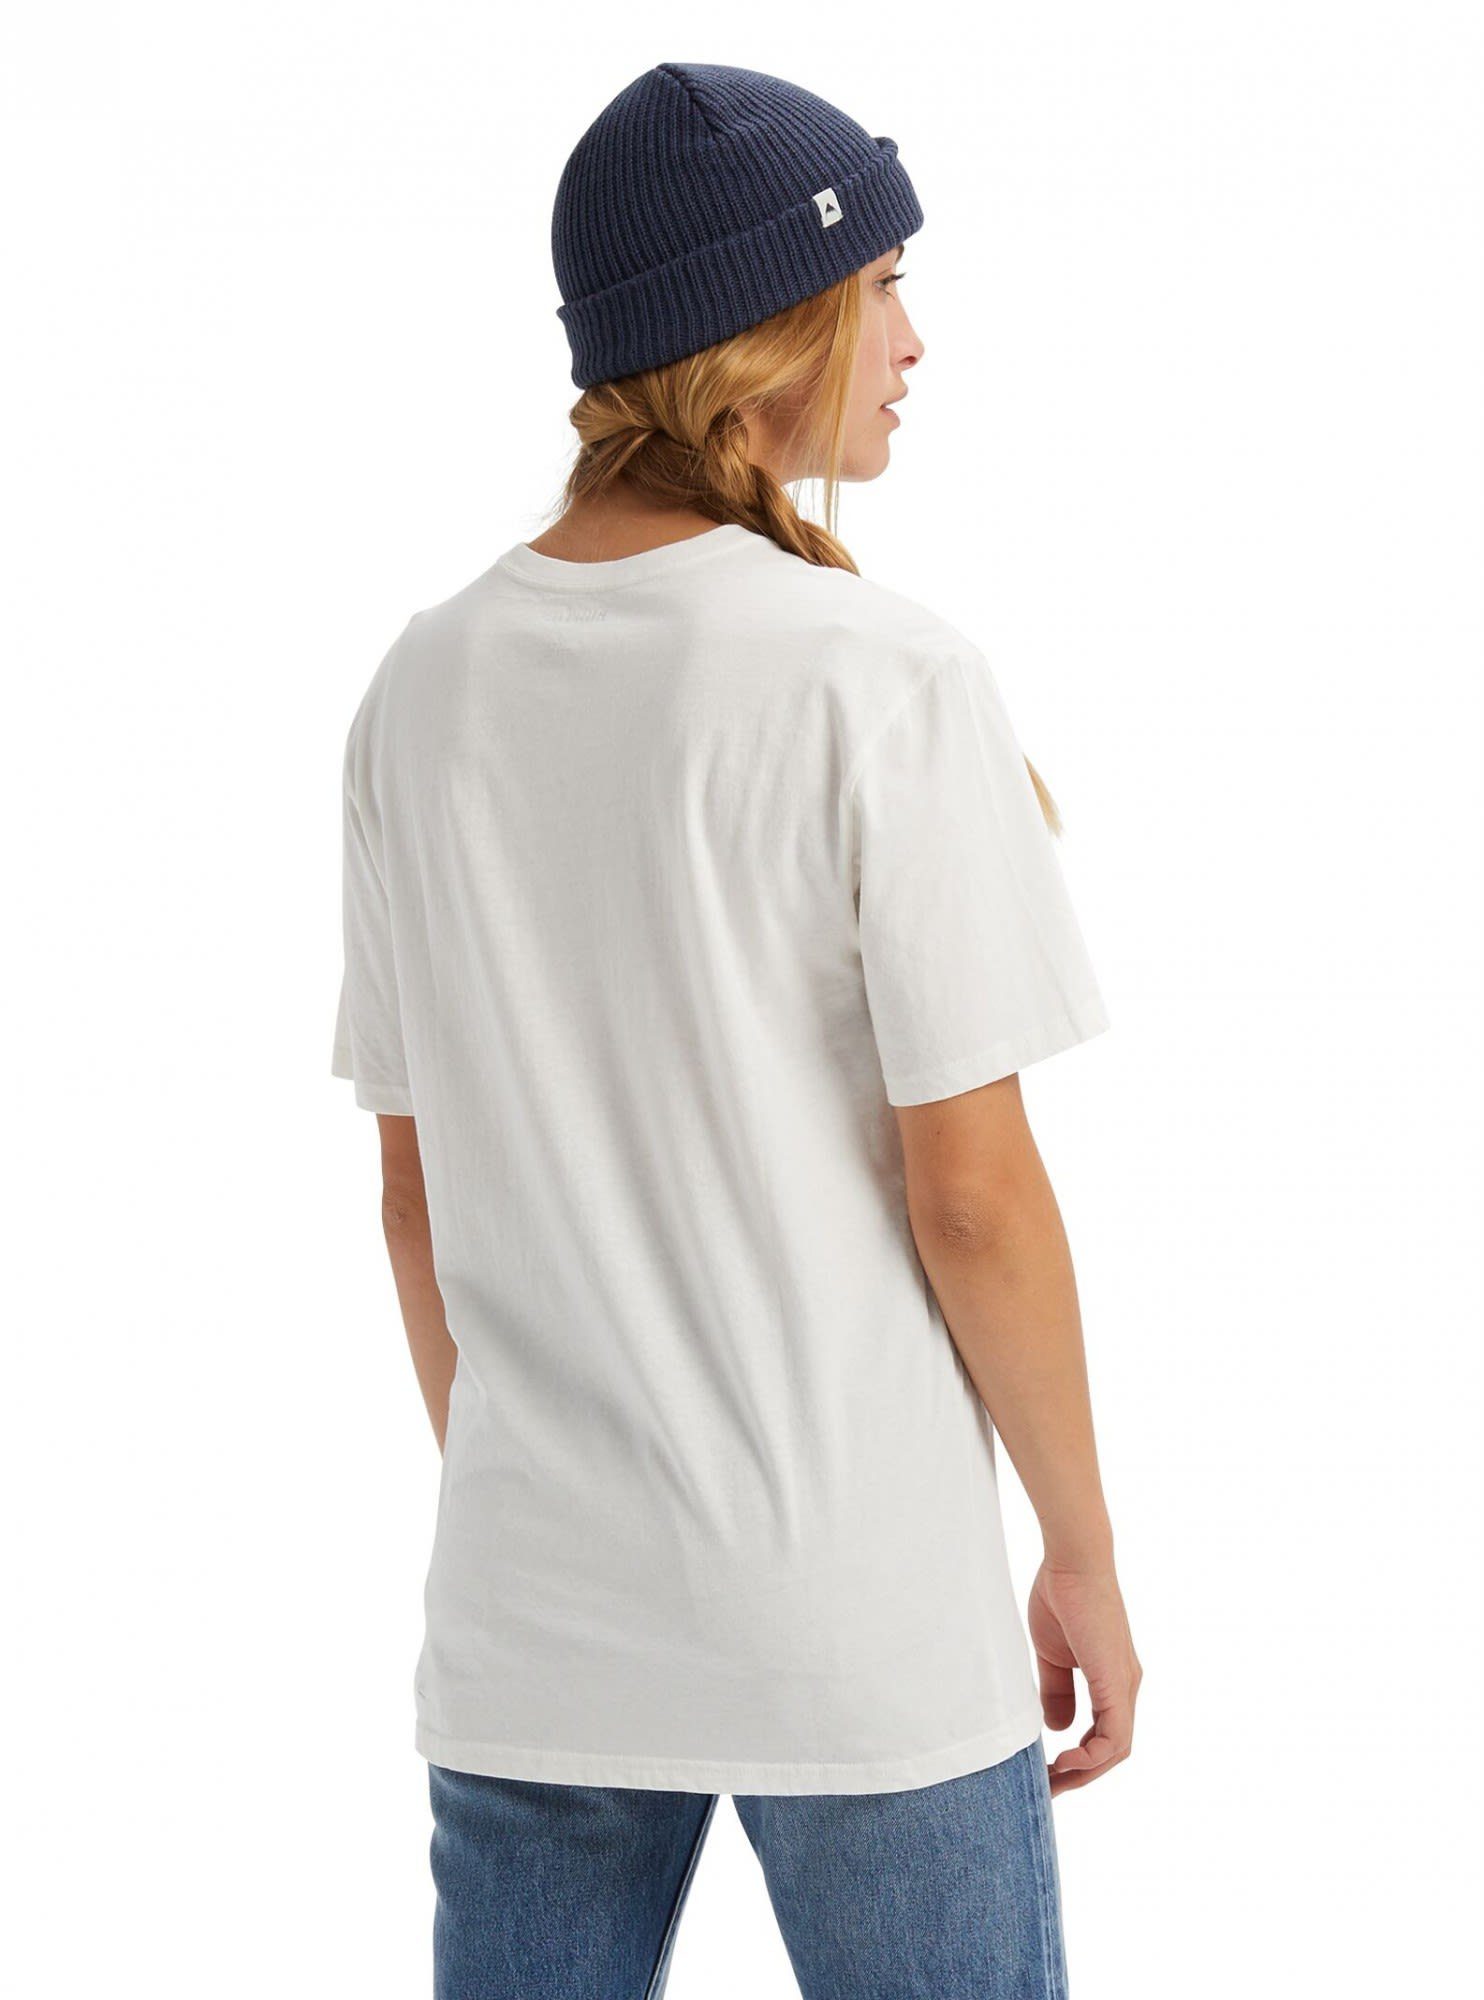 Stout Burton Underhill Burton Shortsleeve Tee Kurzarm-Shirt T-Shirt White